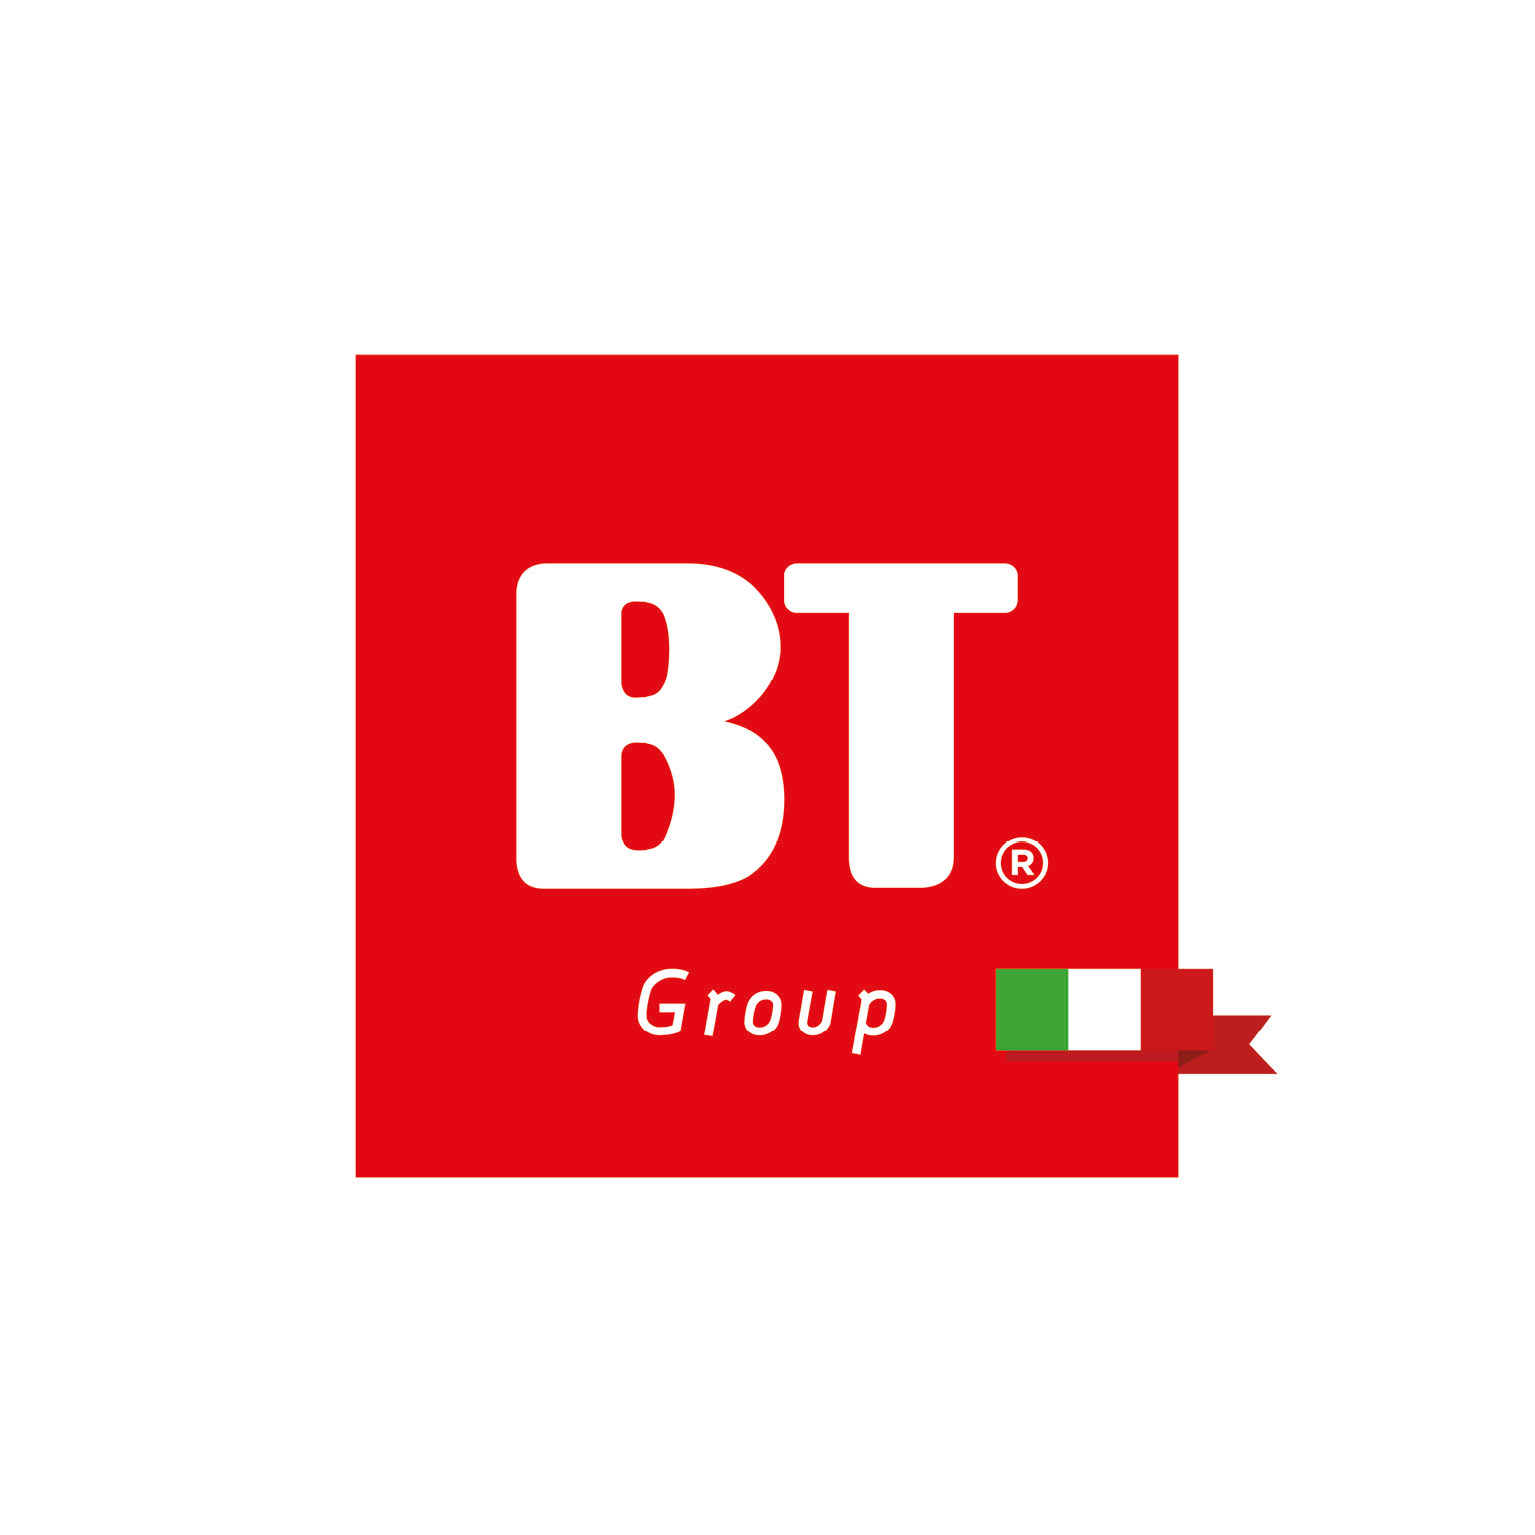 BT Group